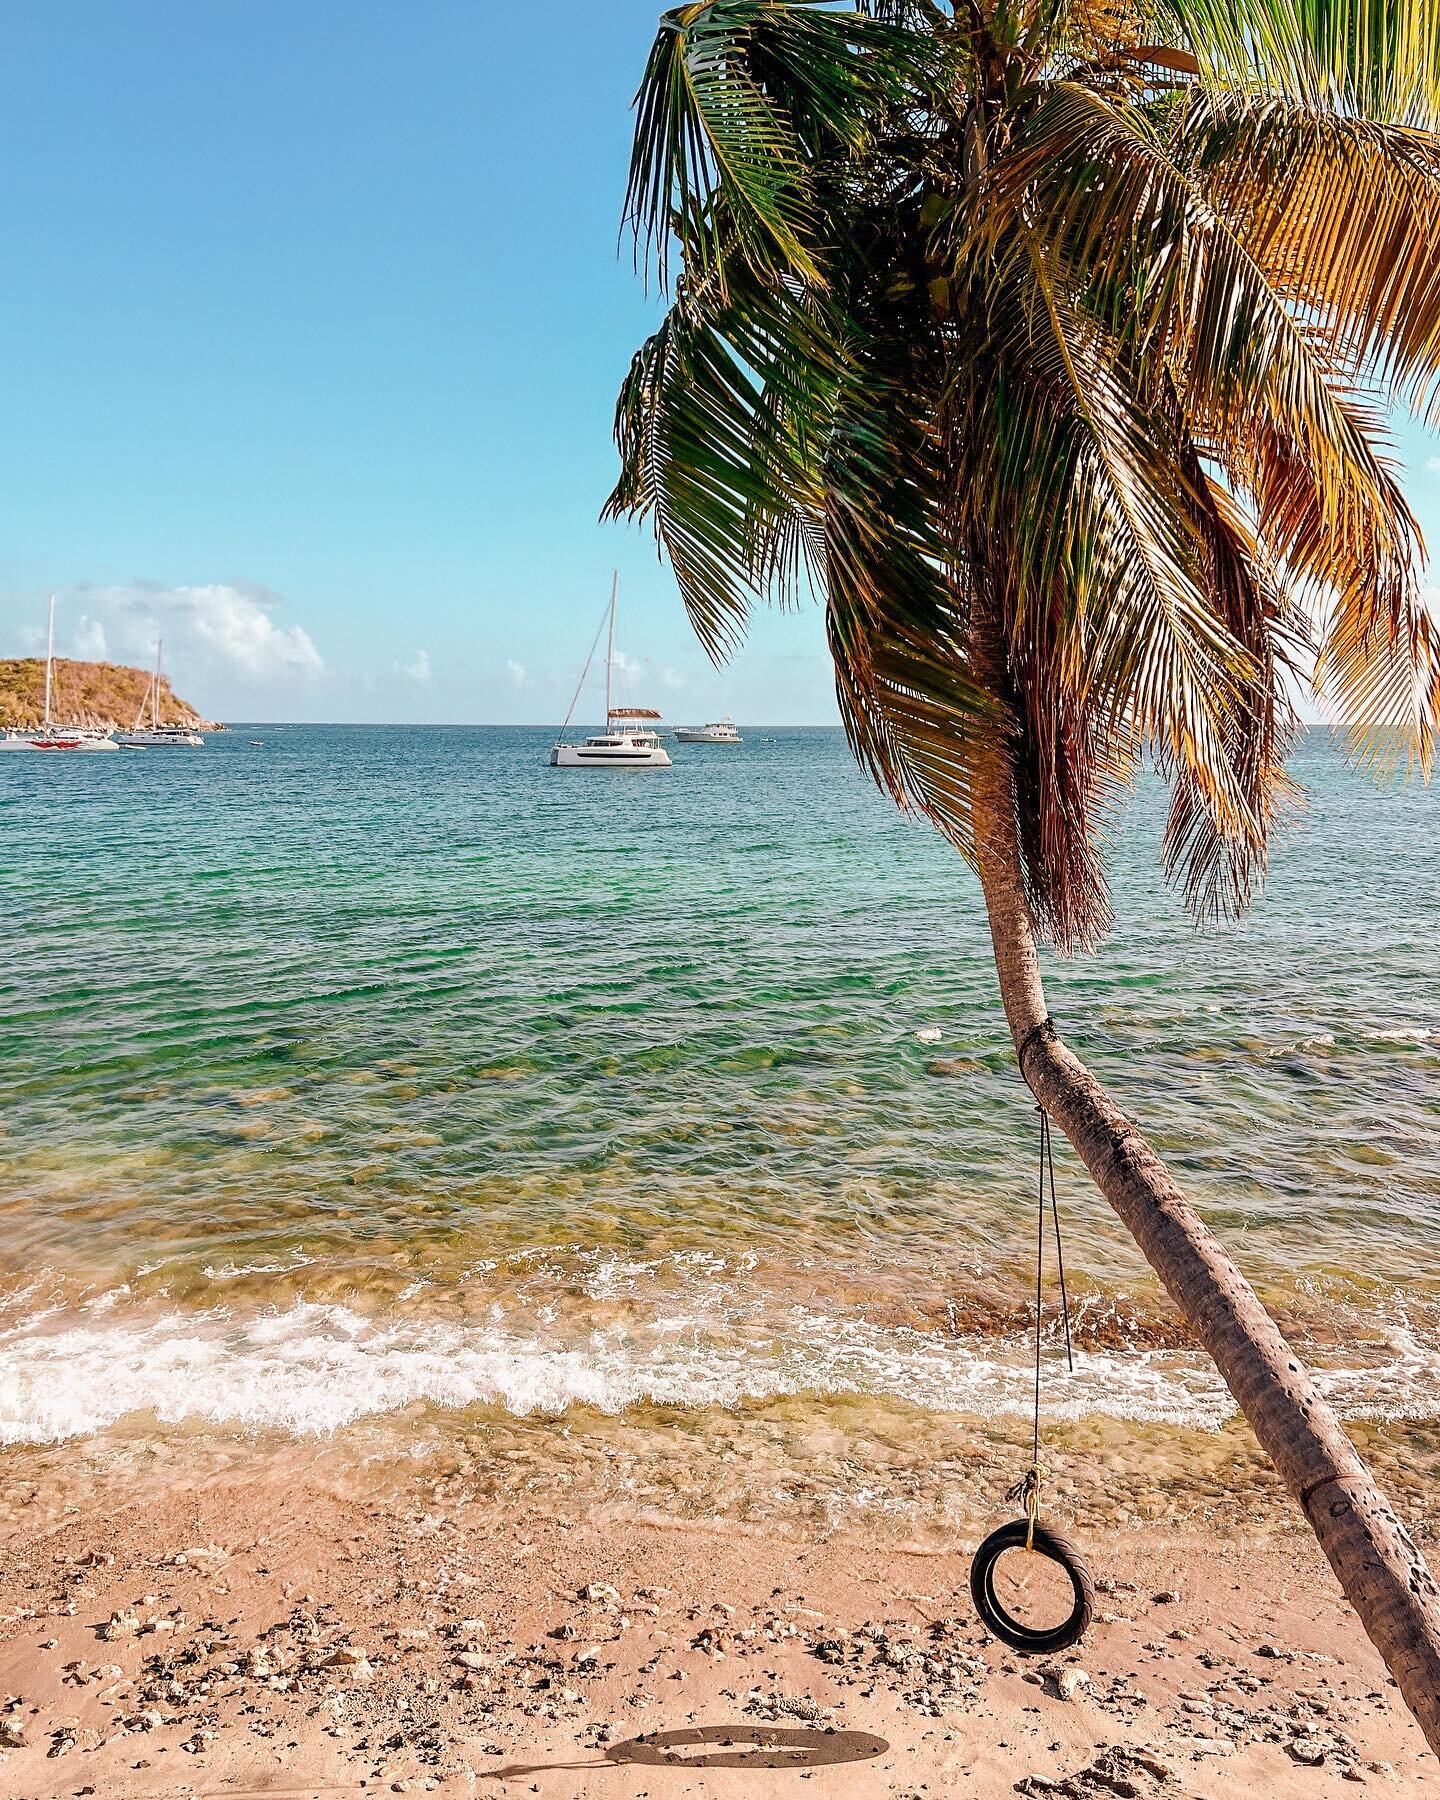 swinging on sun beams 

#vieques #viequesisland #puertorico #islandlifestyle #palmtreesfordays #vacationmodeon #syracusebrandphotographer #syracusephotographer #syracusephotography #syracuseny #brandphotography